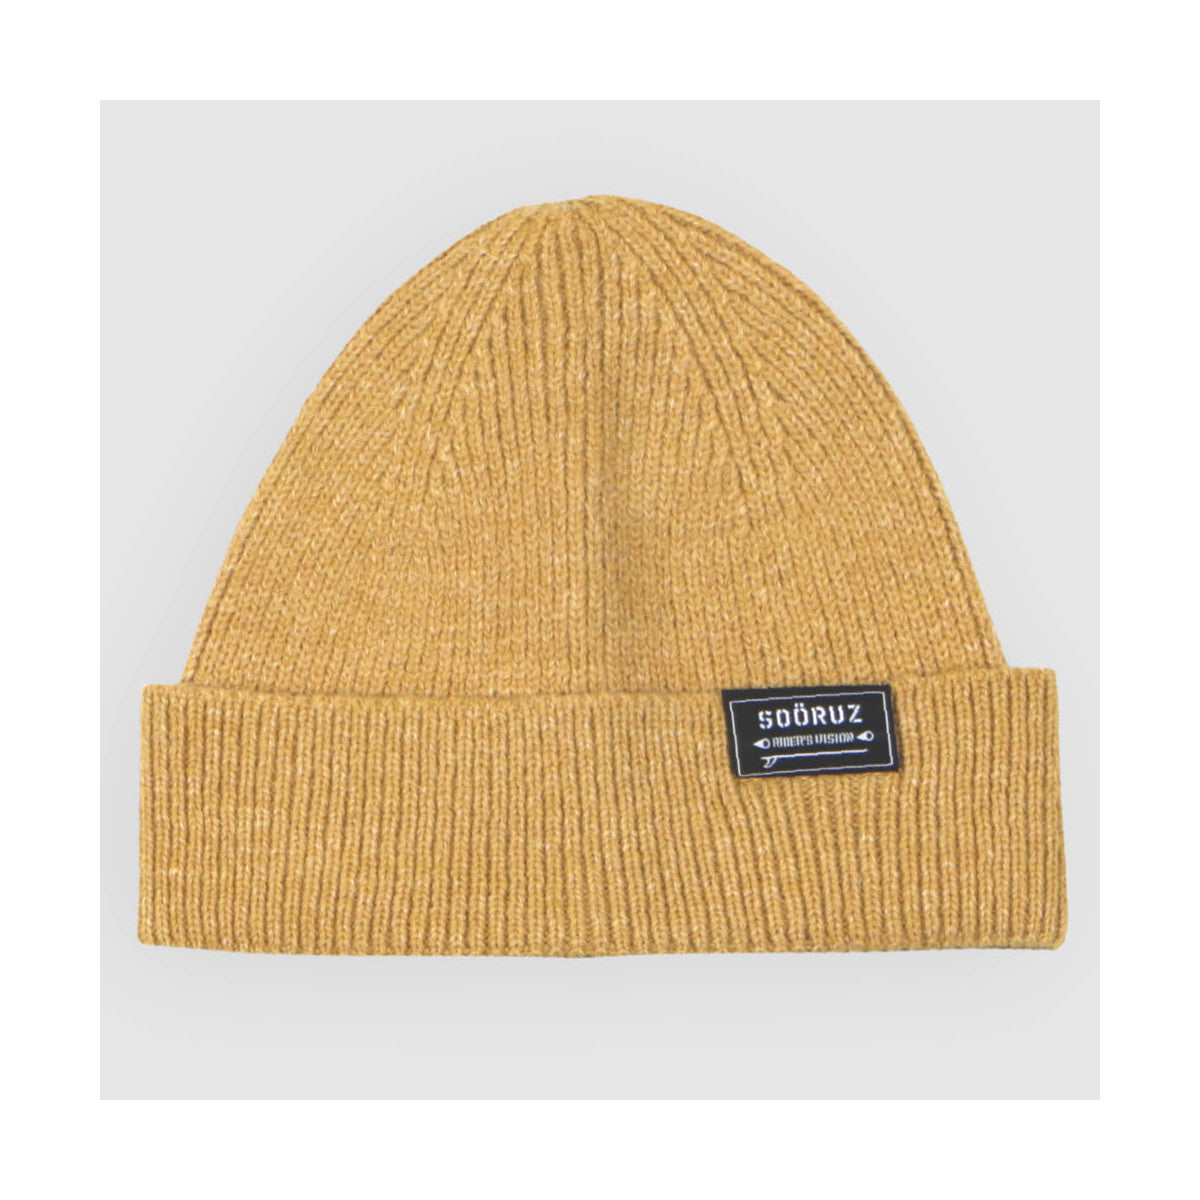 SOORUZ Beanie simple כובע צמר צהוב עם לוגו קטן 2022/23